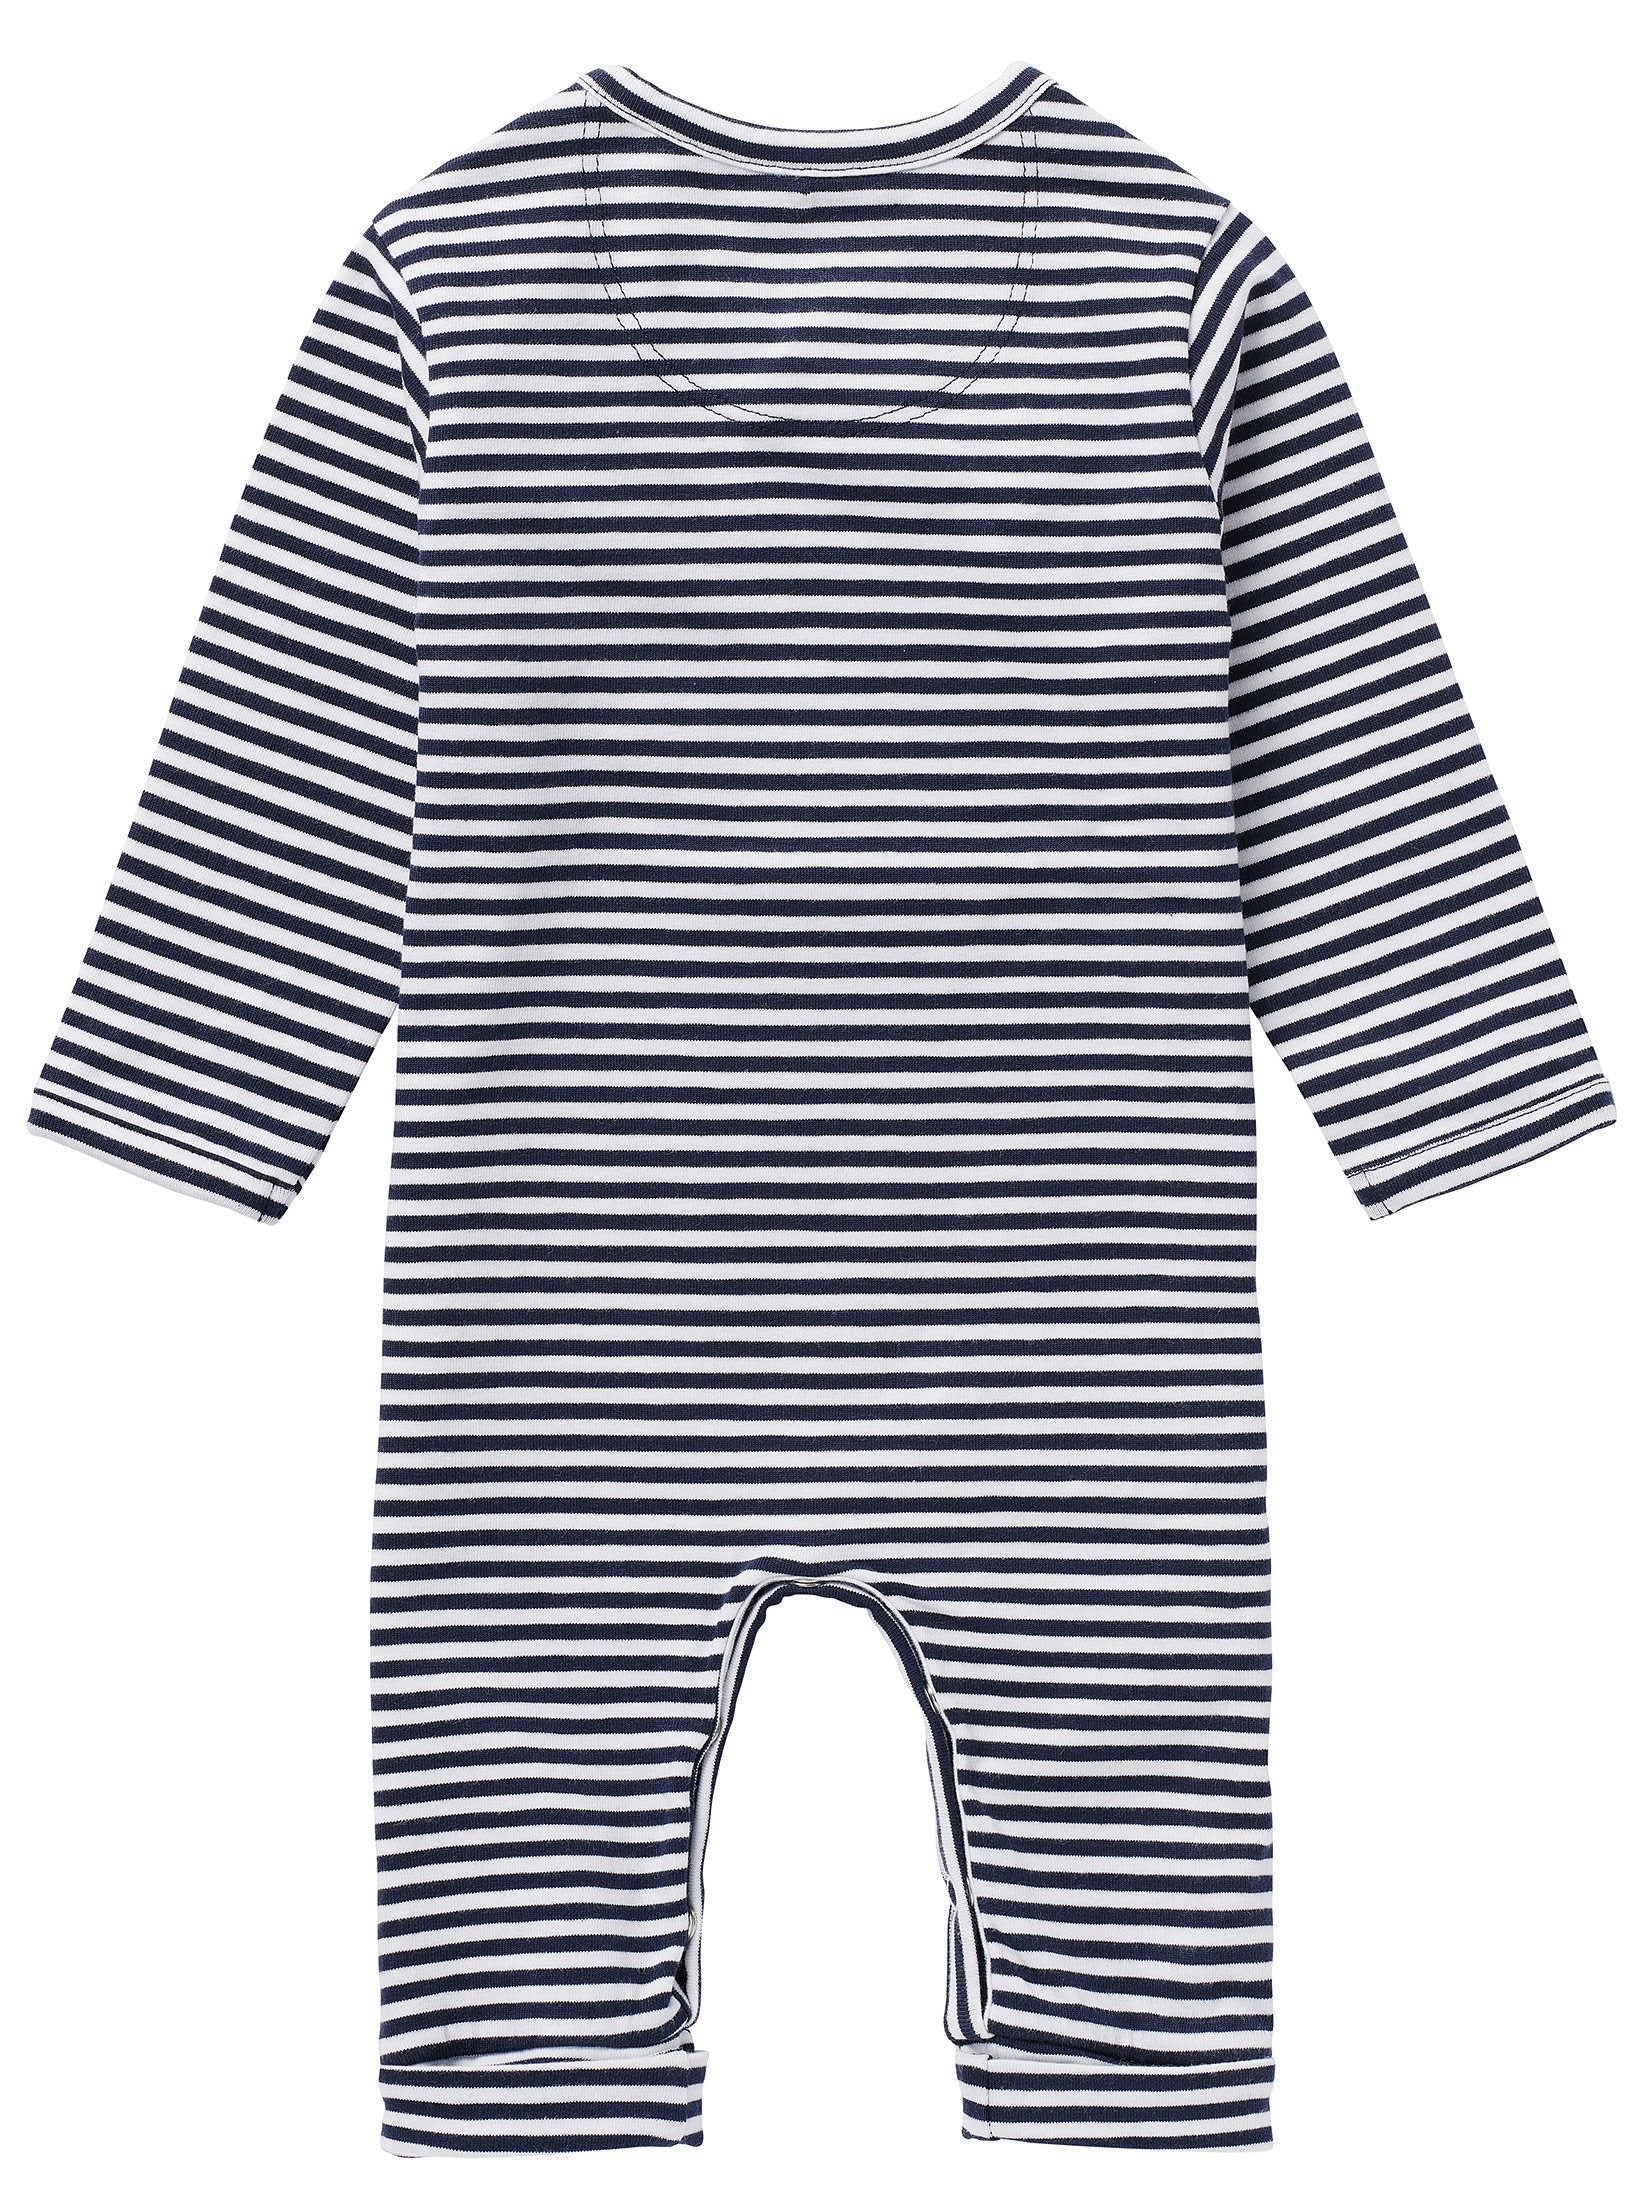 Striped Footless Sleepsuit - Navy & White - Sleepsuit / Babygrow - Noppies